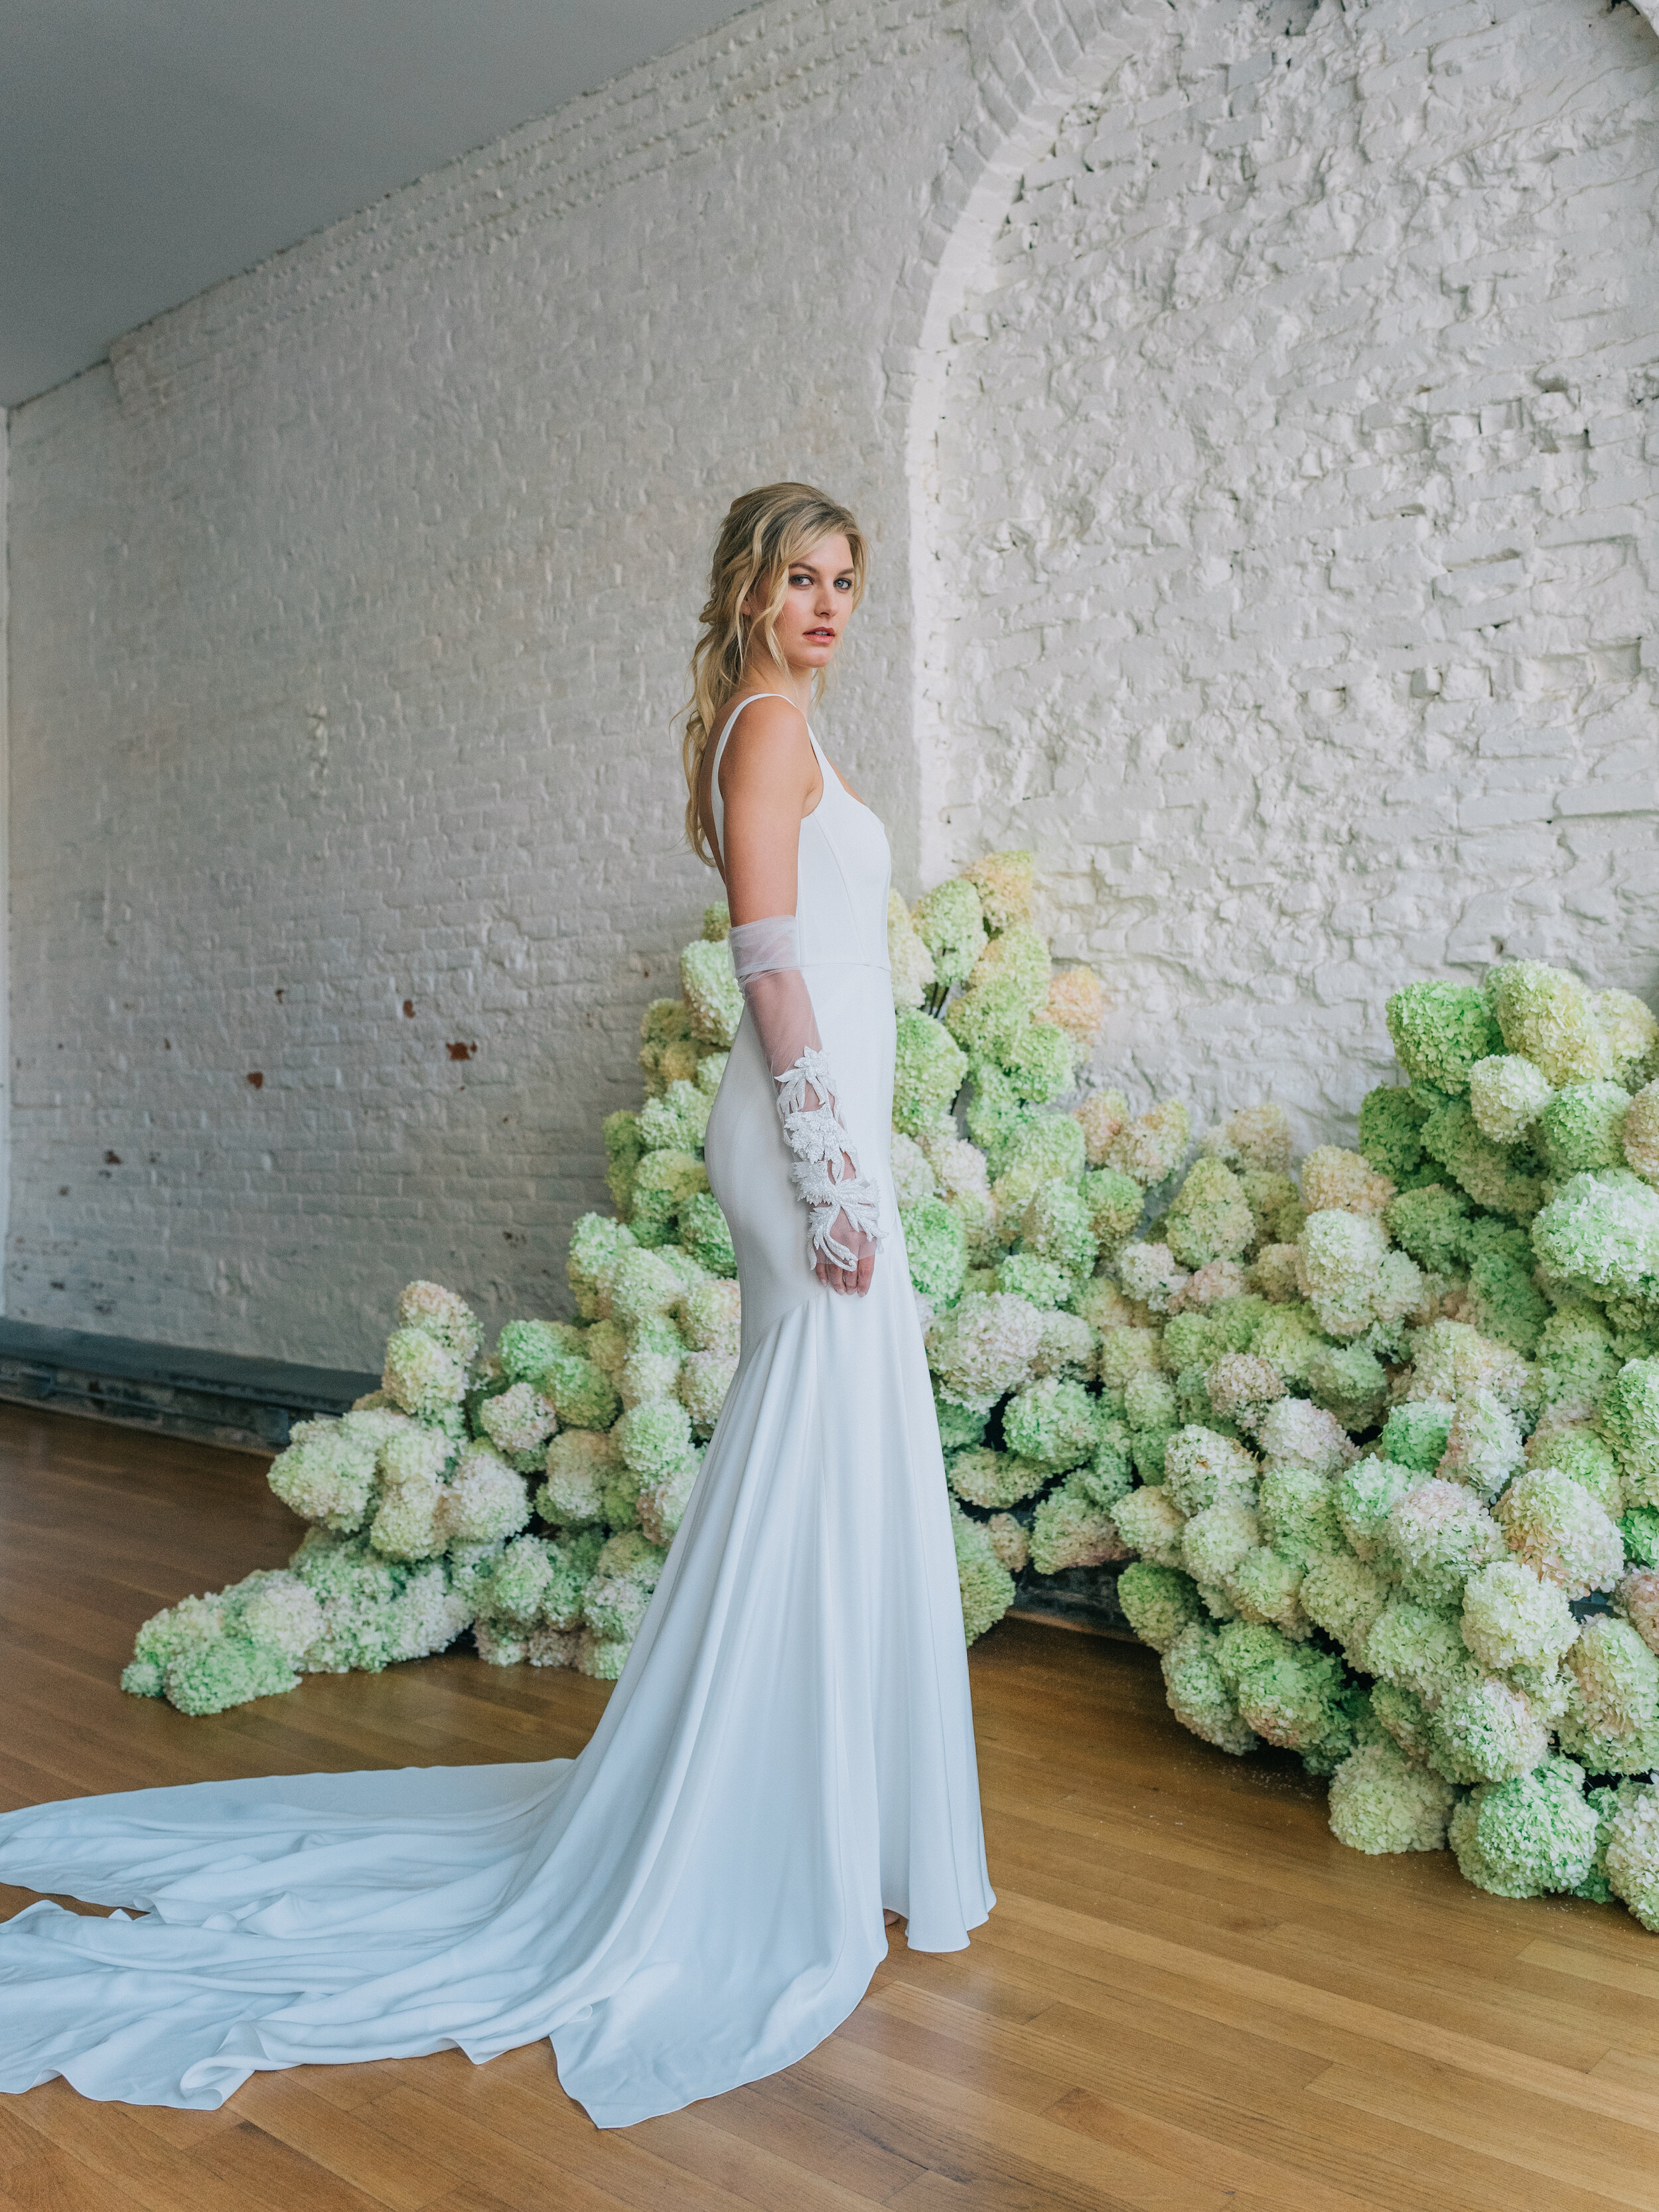 Alabaster fit and flare silk crepe square neck wedding gown by bridal designer Carol Hannah 4.jpg